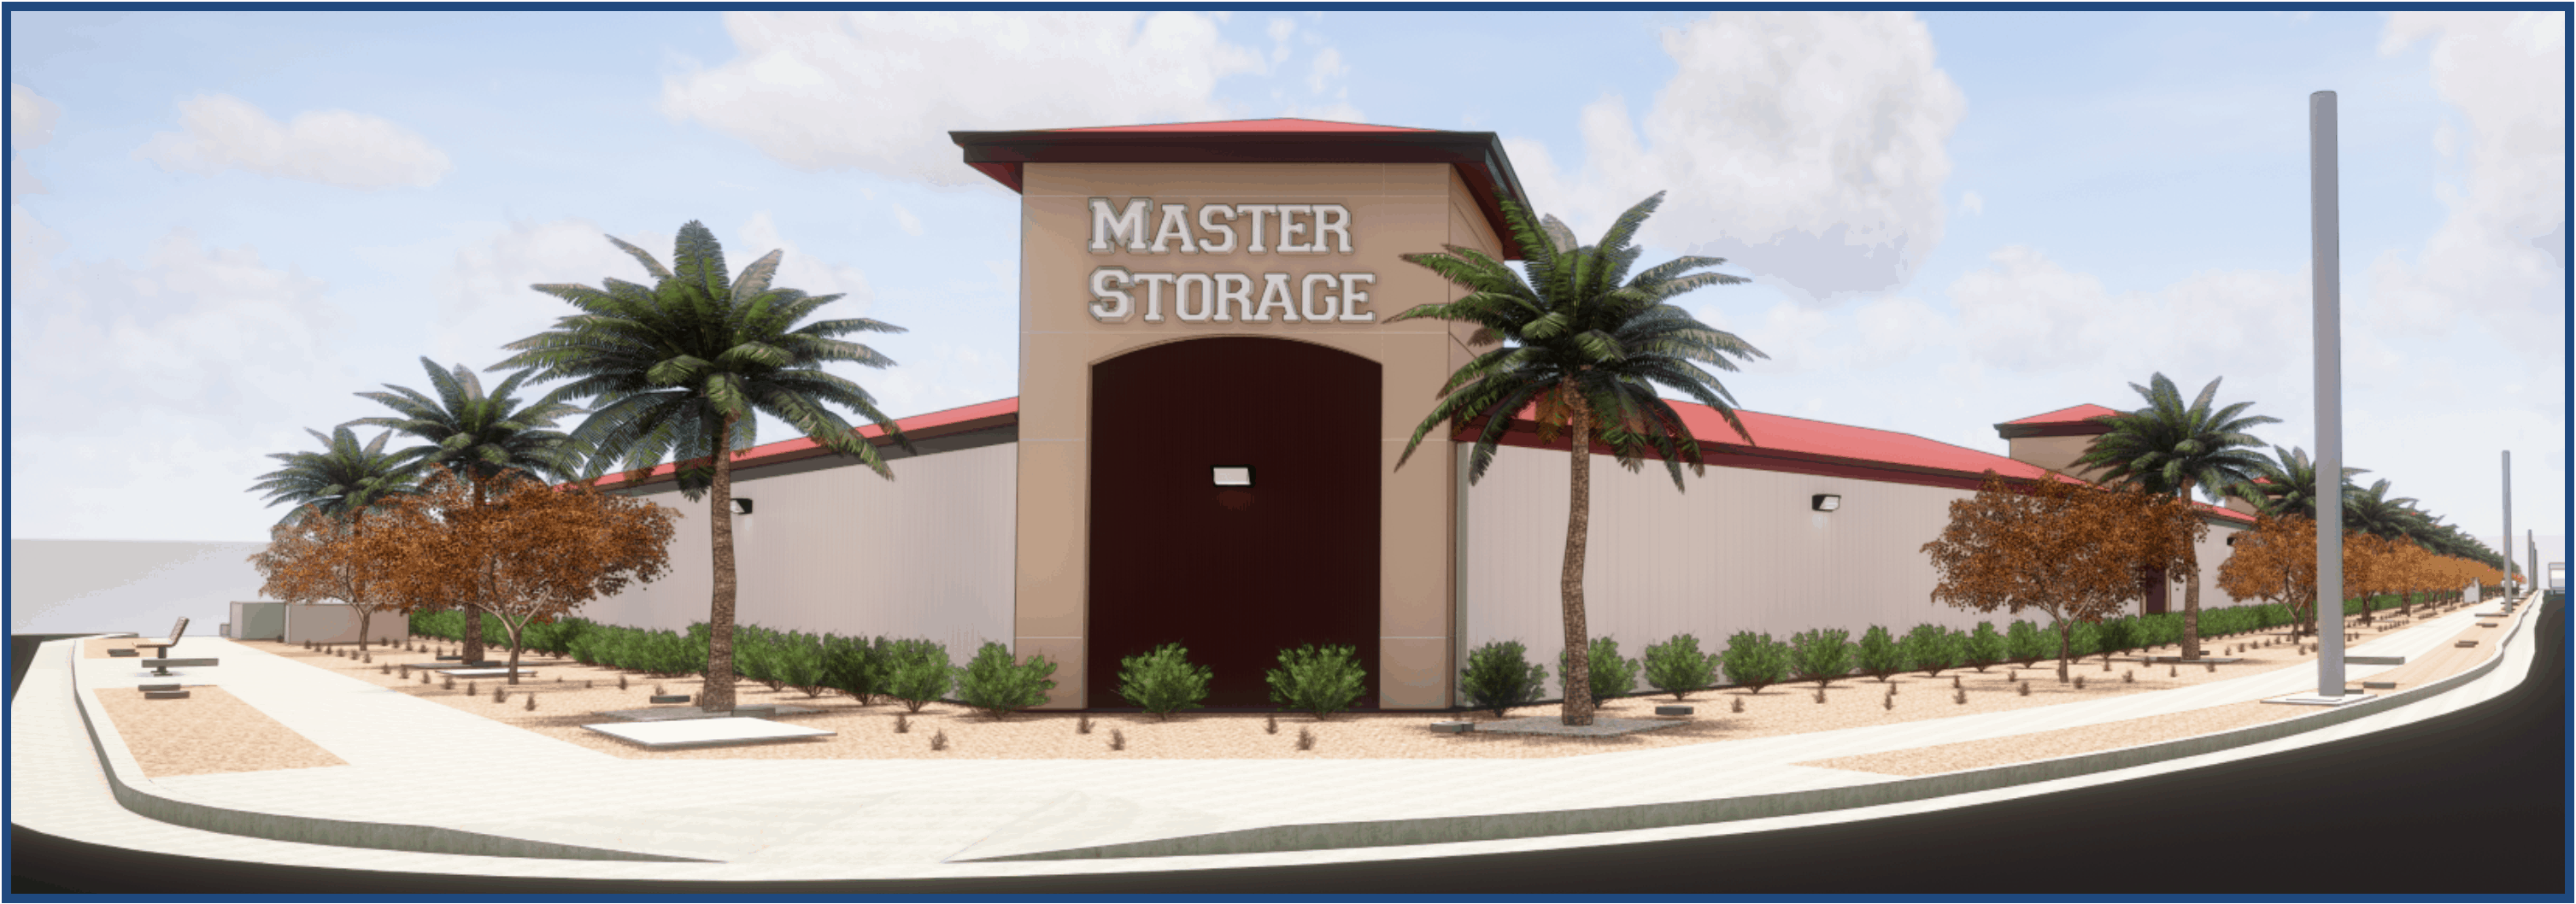 Master Storage 365 - Madera, CA, US, storage units